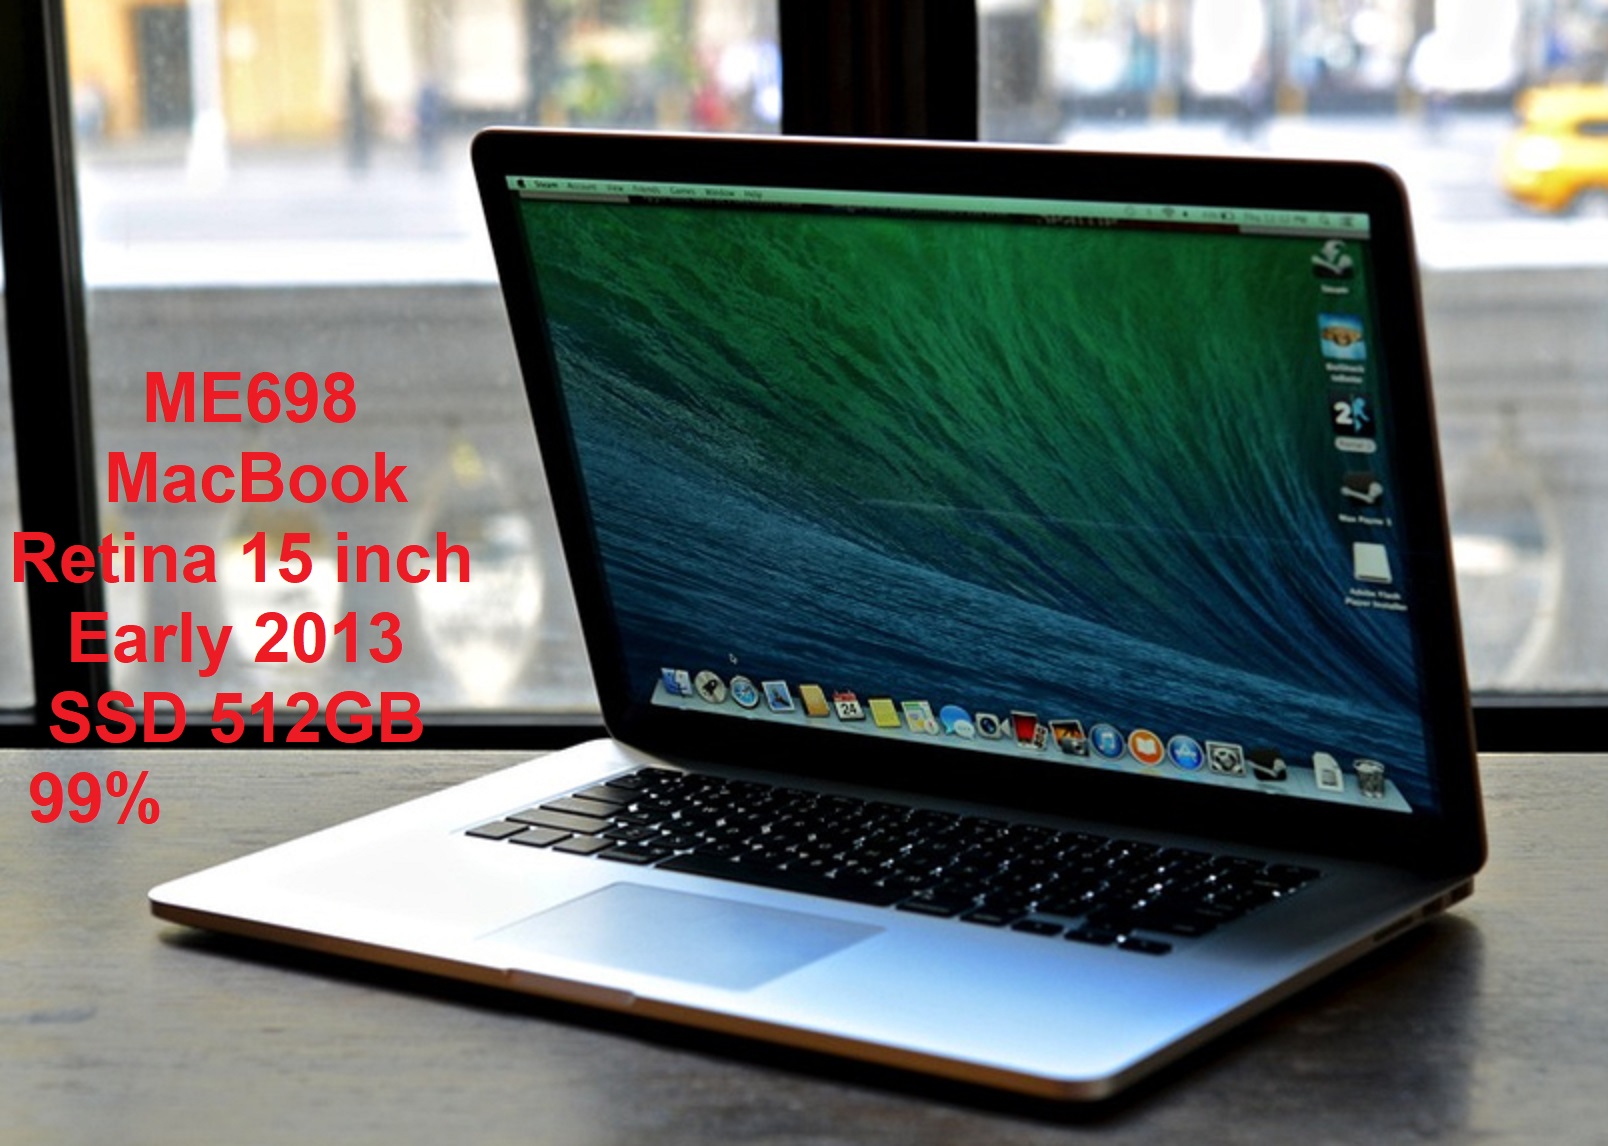 ME698 MacBook Retina 15 inch Early 2013 SSD 512GB 99%